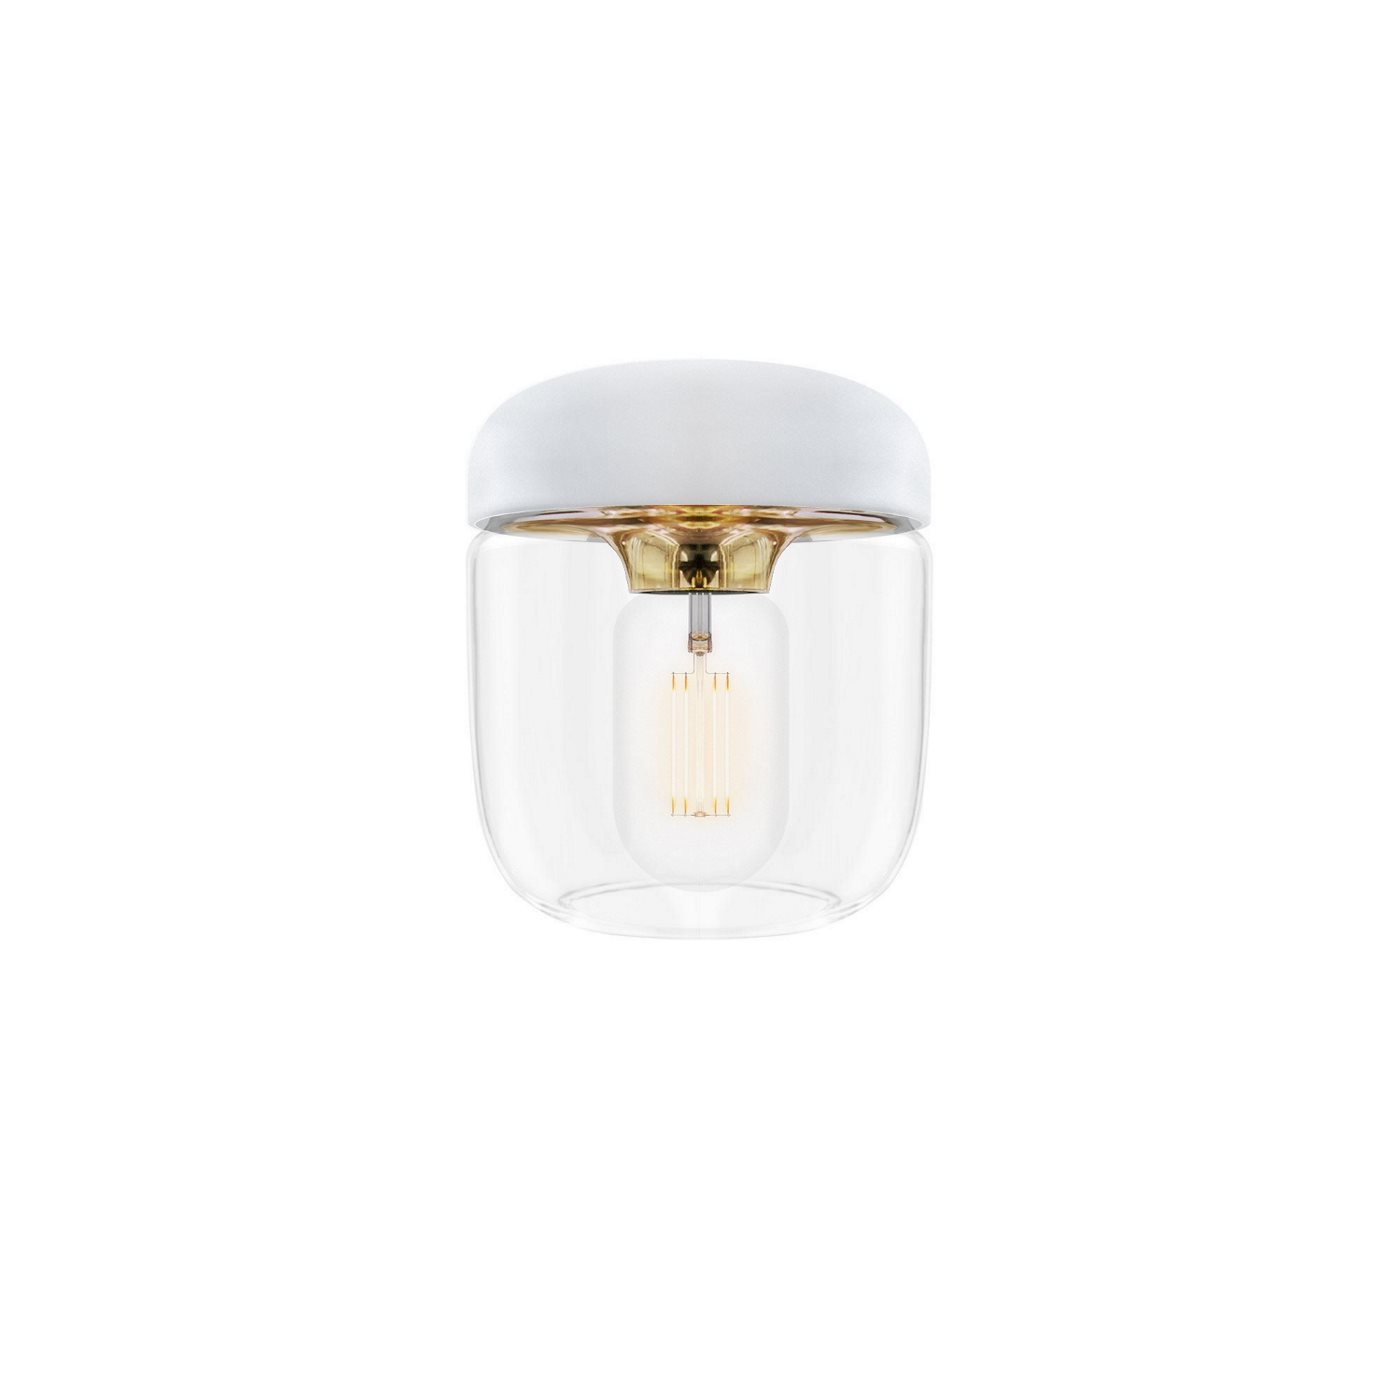 Acorn lampa white brass, Vita